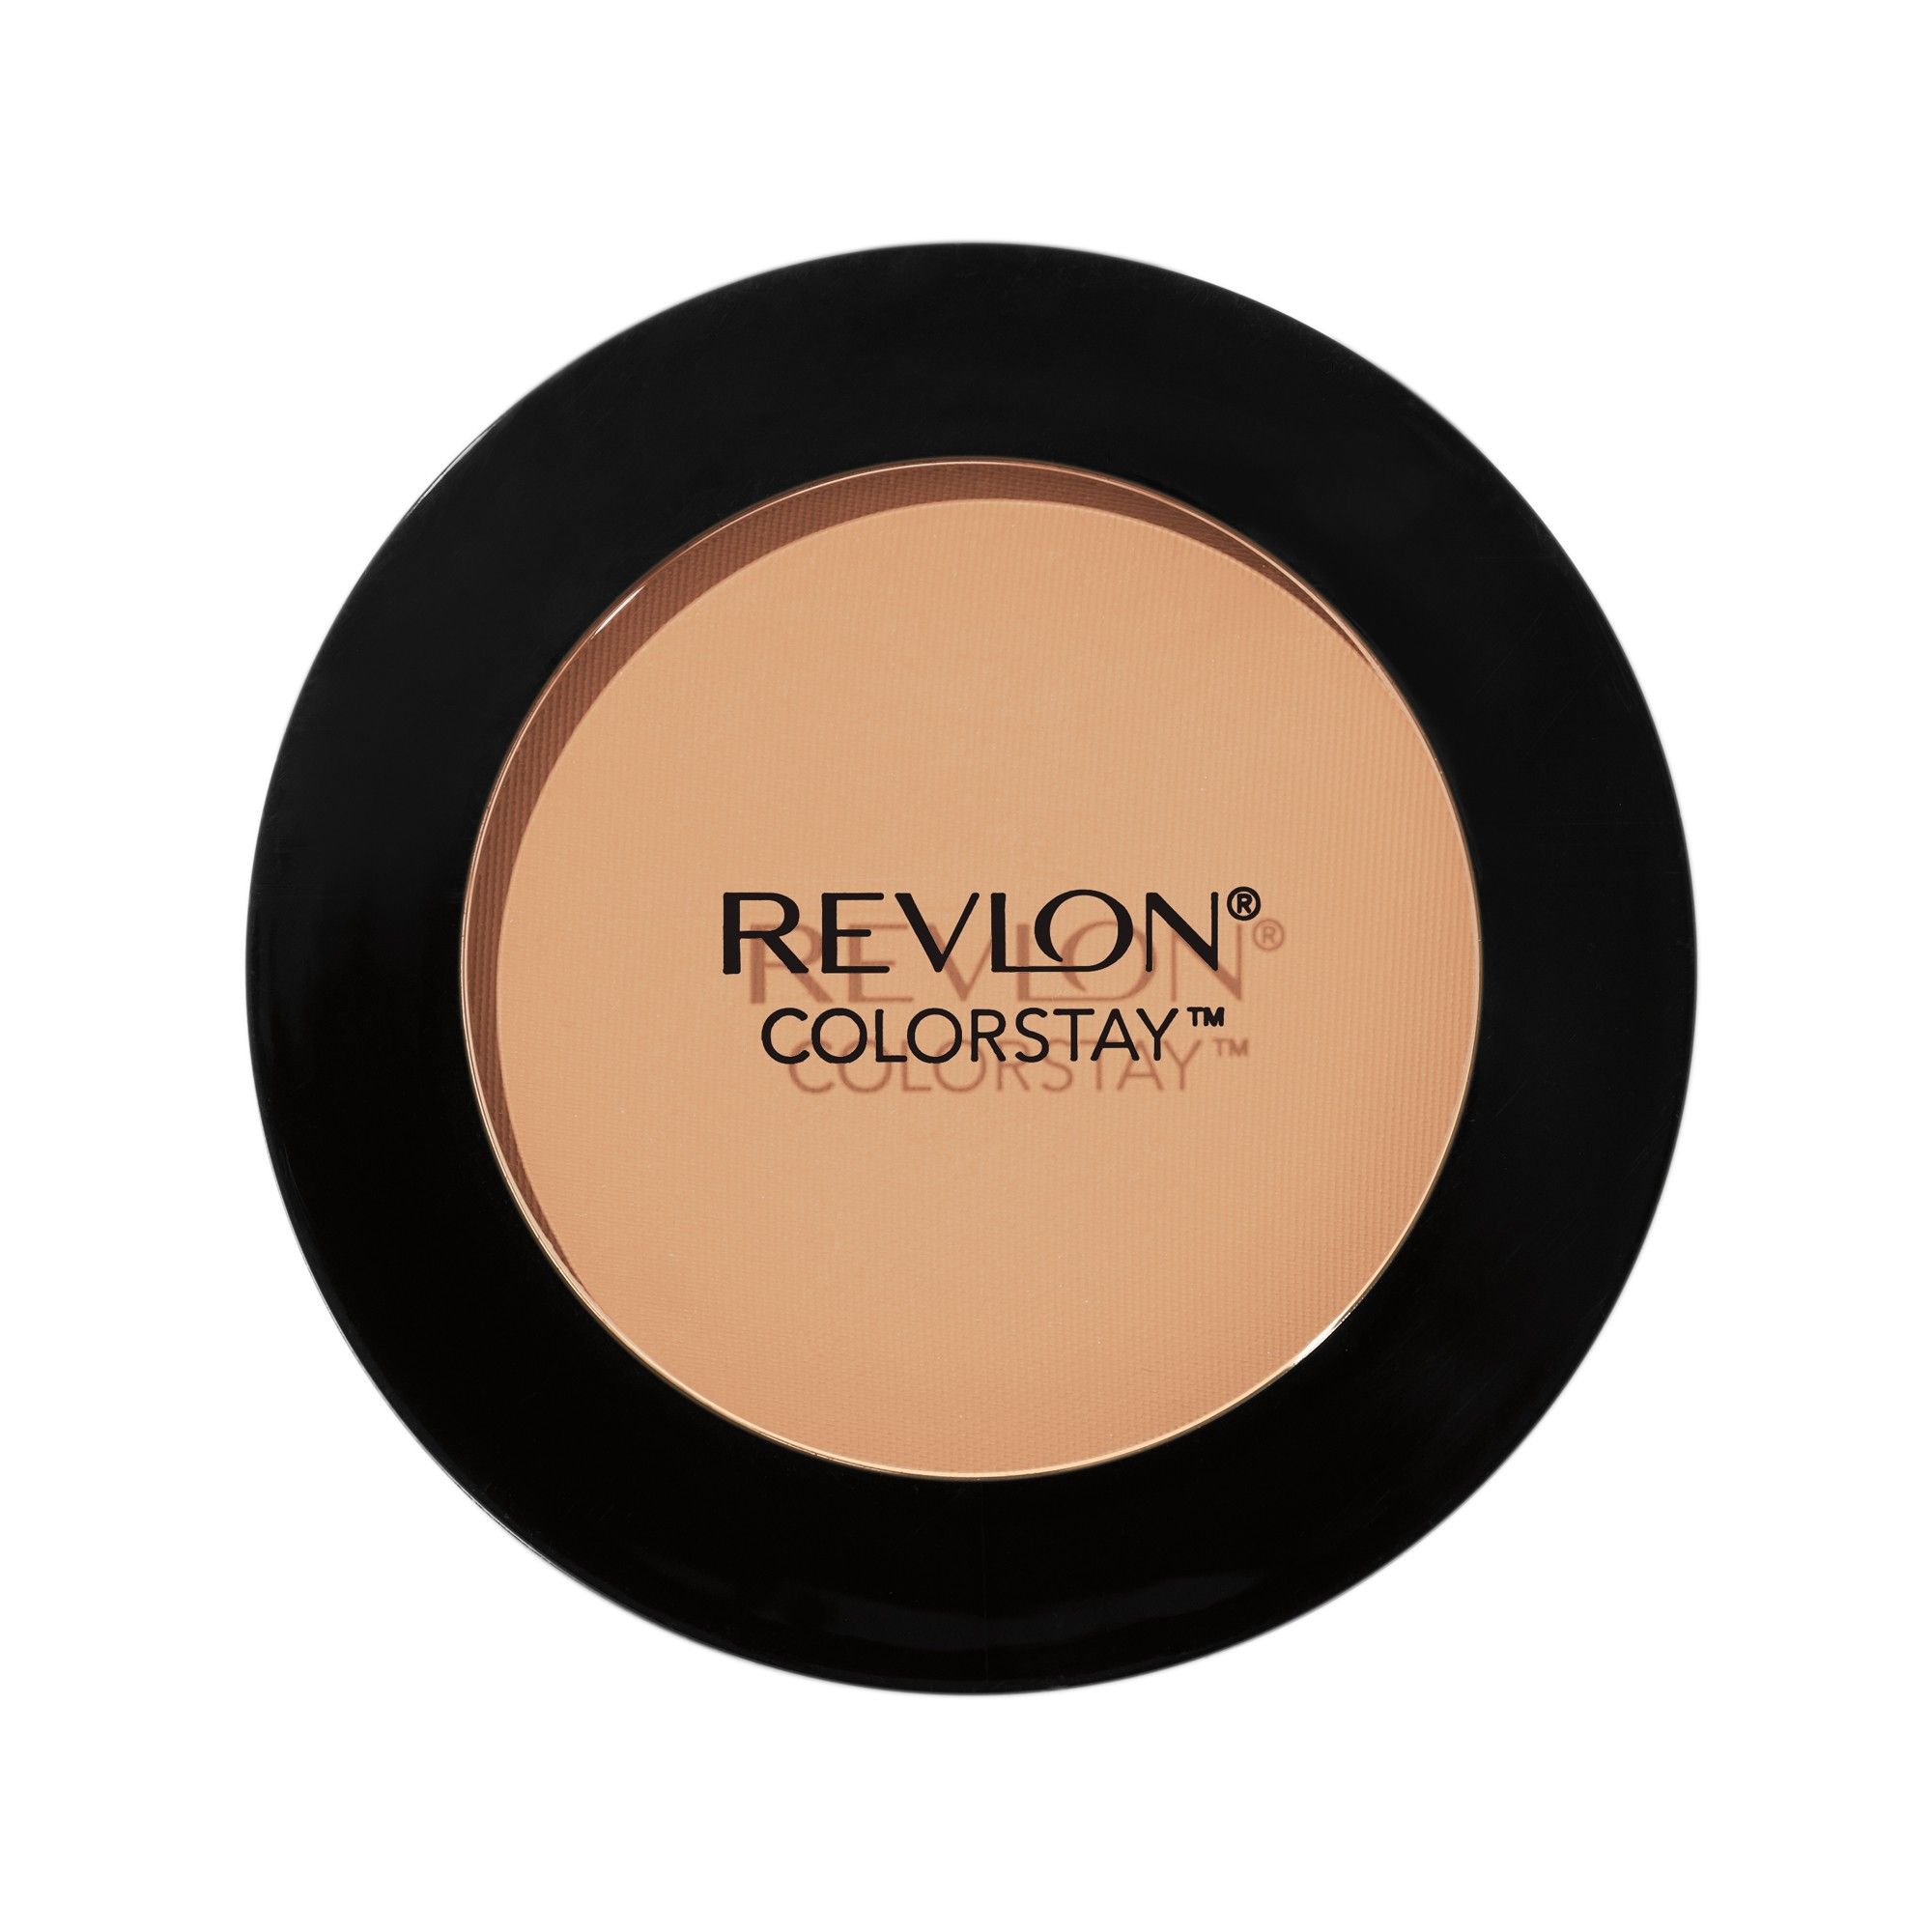 Revlon colorstay powder